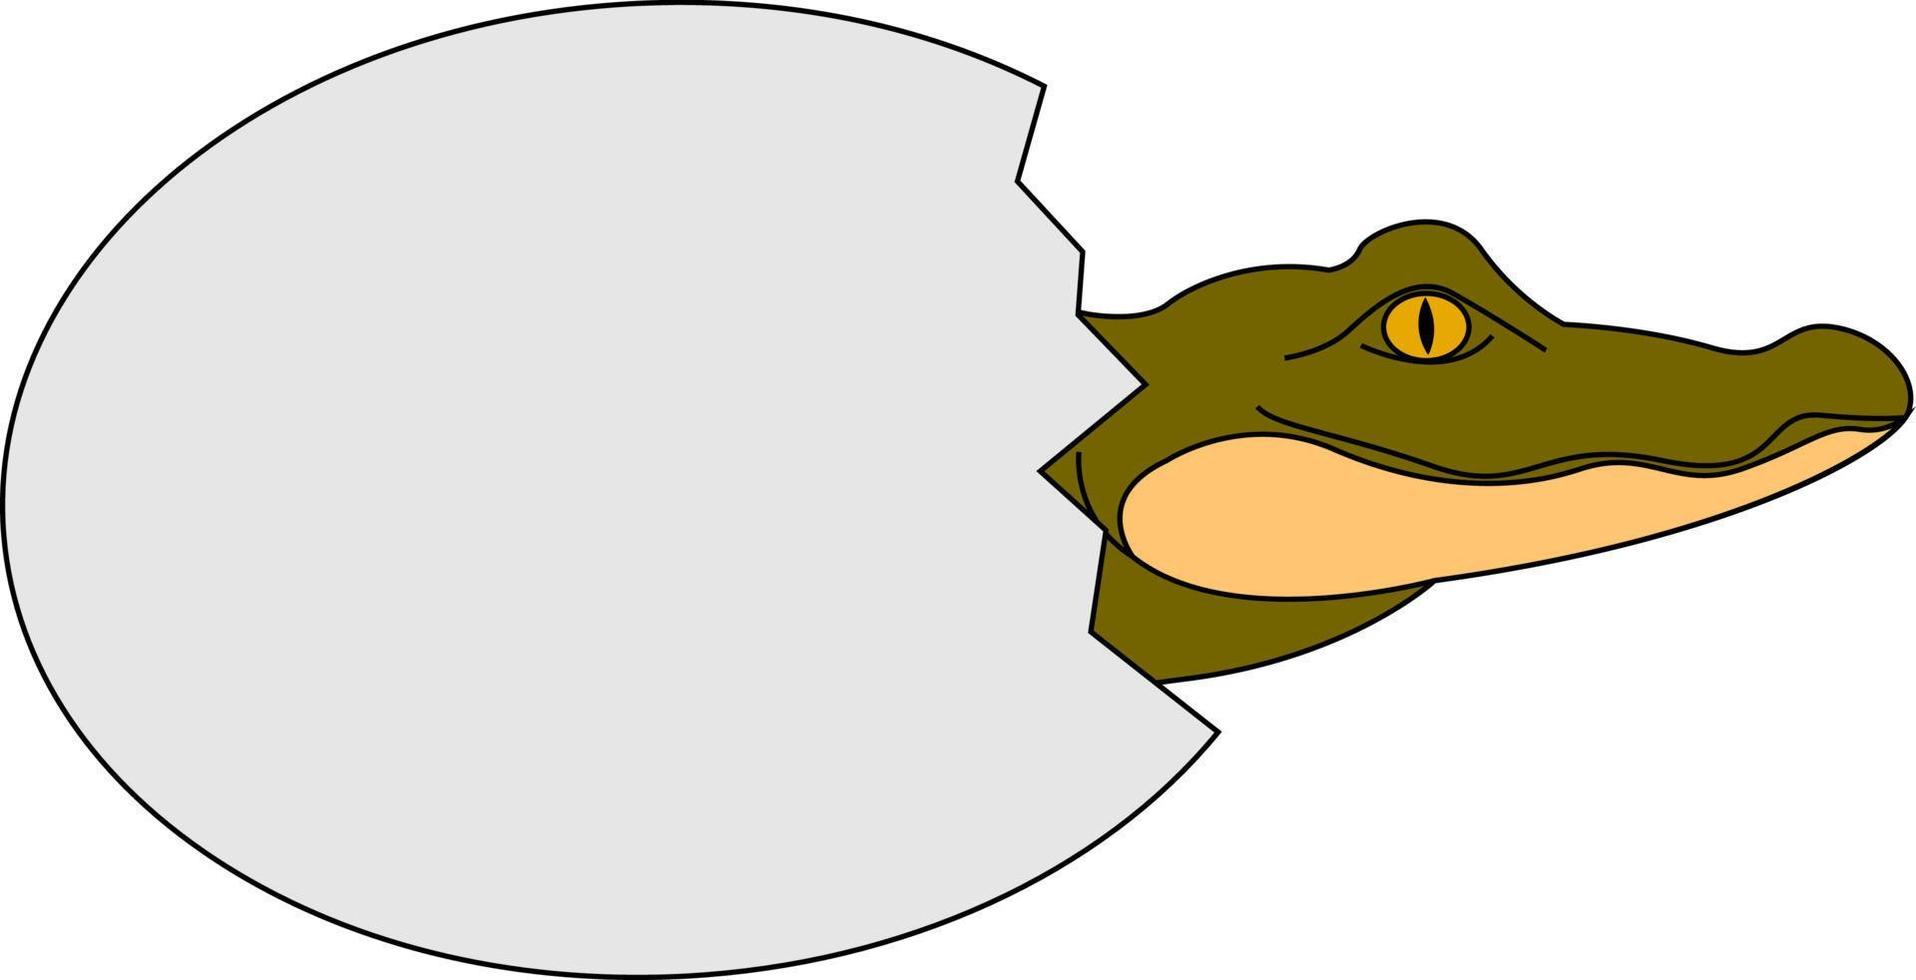 Baby crocodile, illustration, vector on white background.